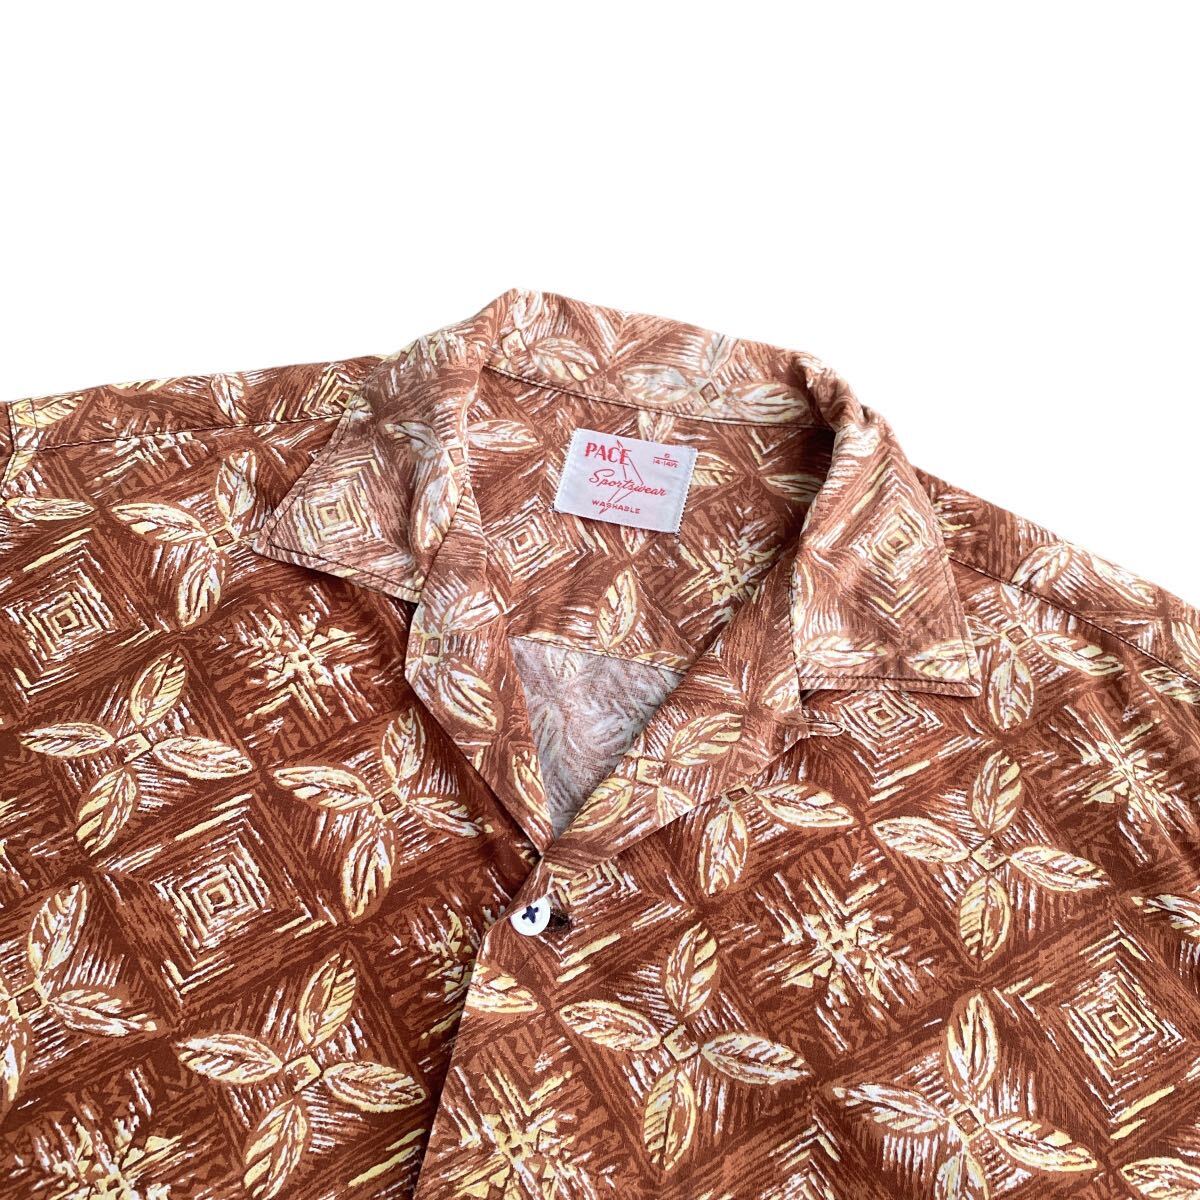 100 иен старт 50s60s US vintage хлопок 100 открытый цвет рубашка короткий рукав S. воротник aro - Hawaiian Vintage PACE SPORTSWEAR America производства 